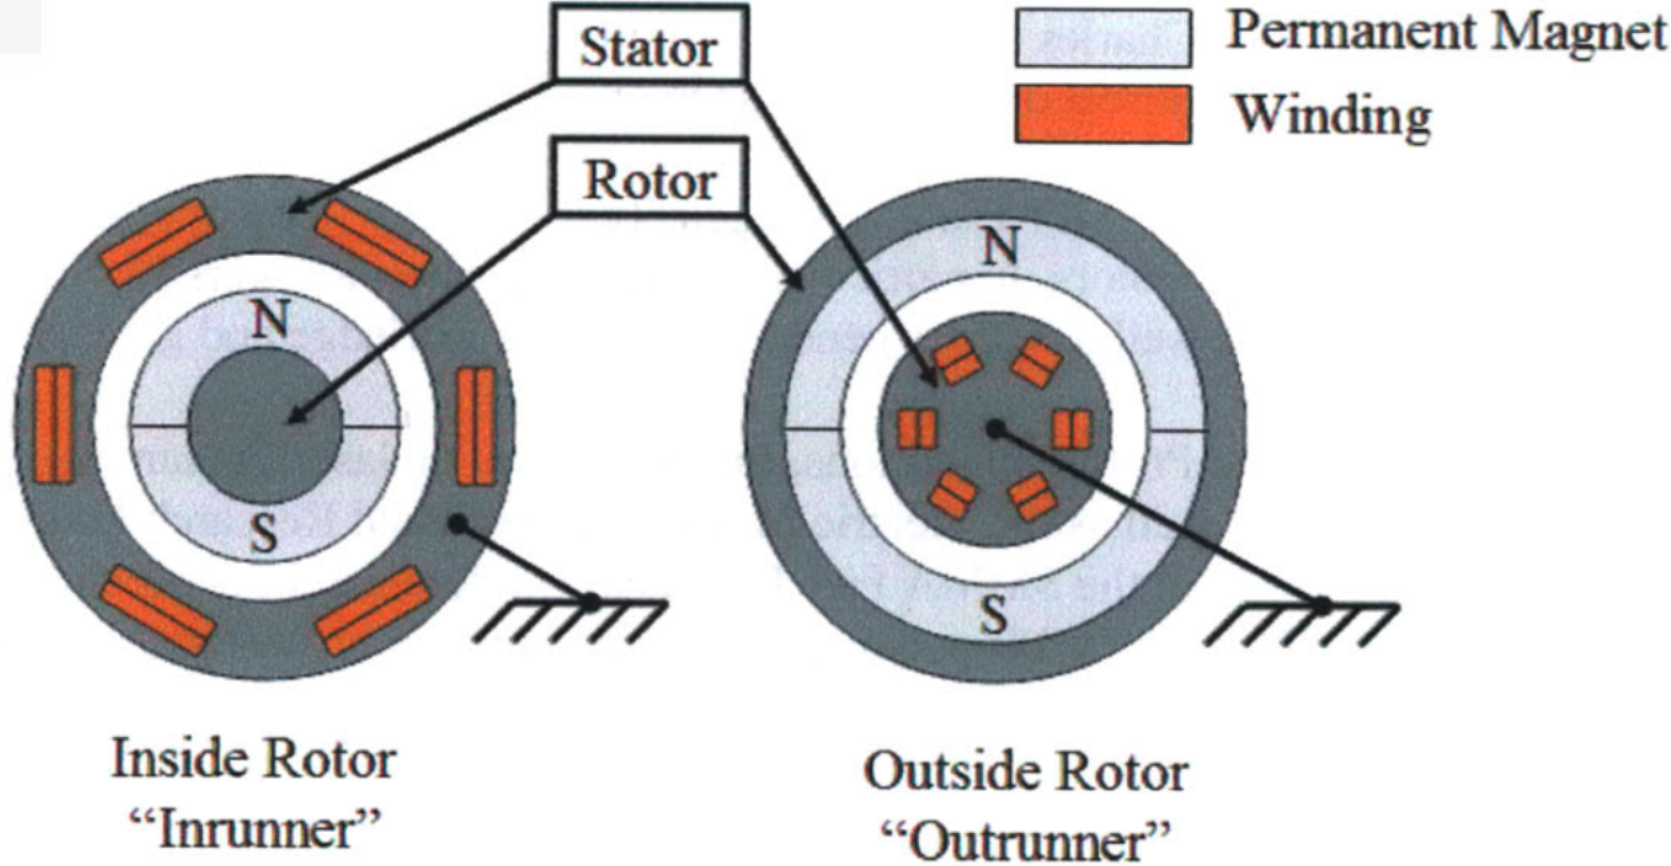 Stator & Rotor, Source:[1]